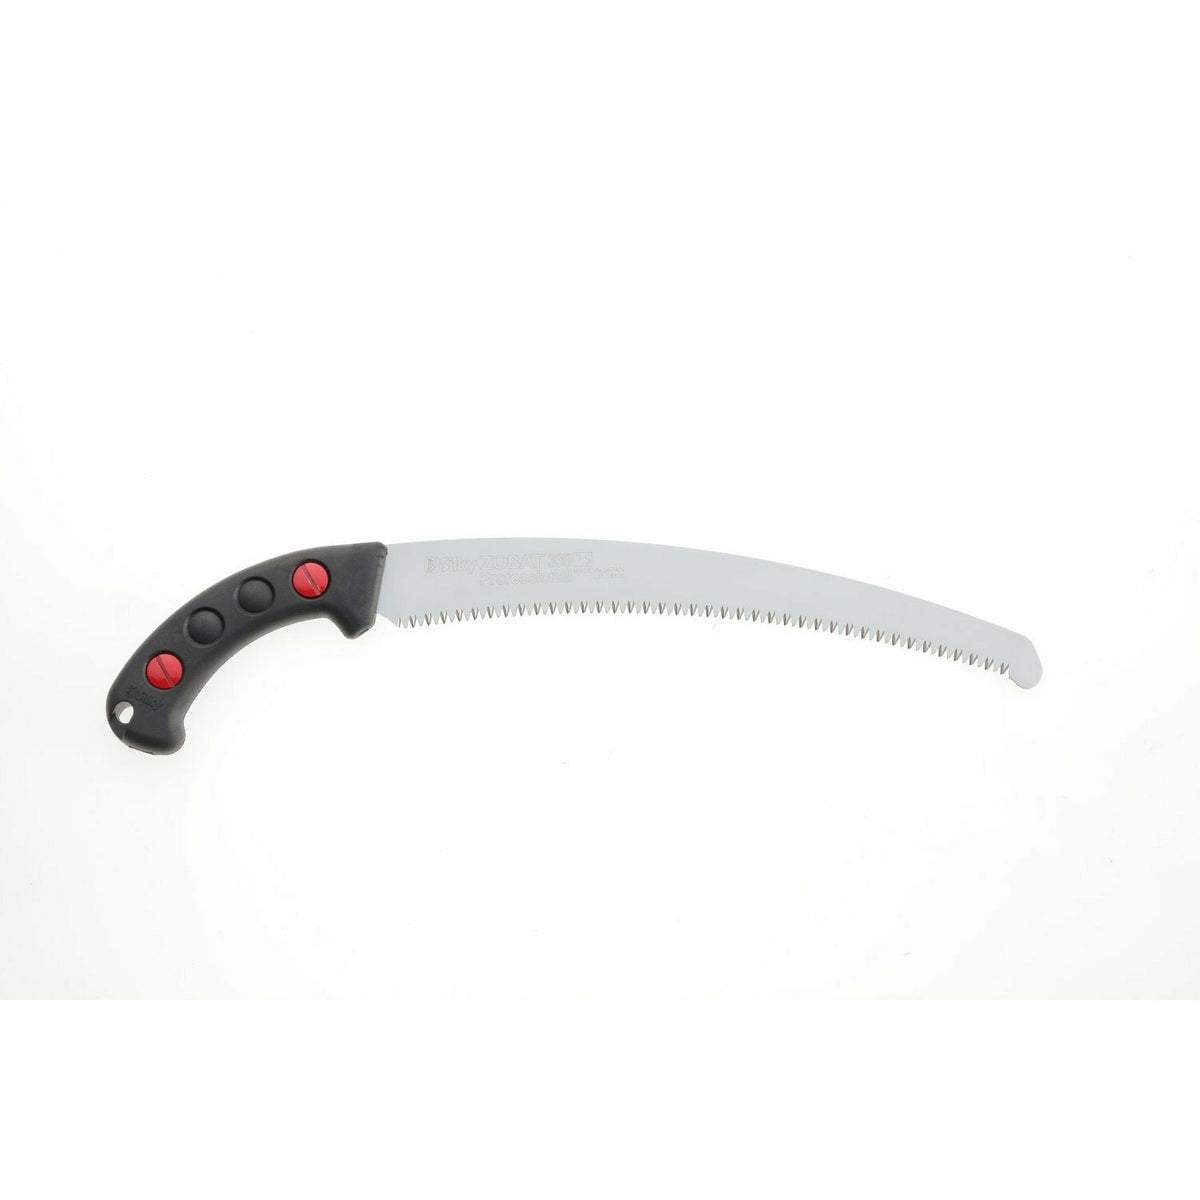 ZUBAT 330 (LG Teeth) Curved Pruning Saw - Axeman.ca